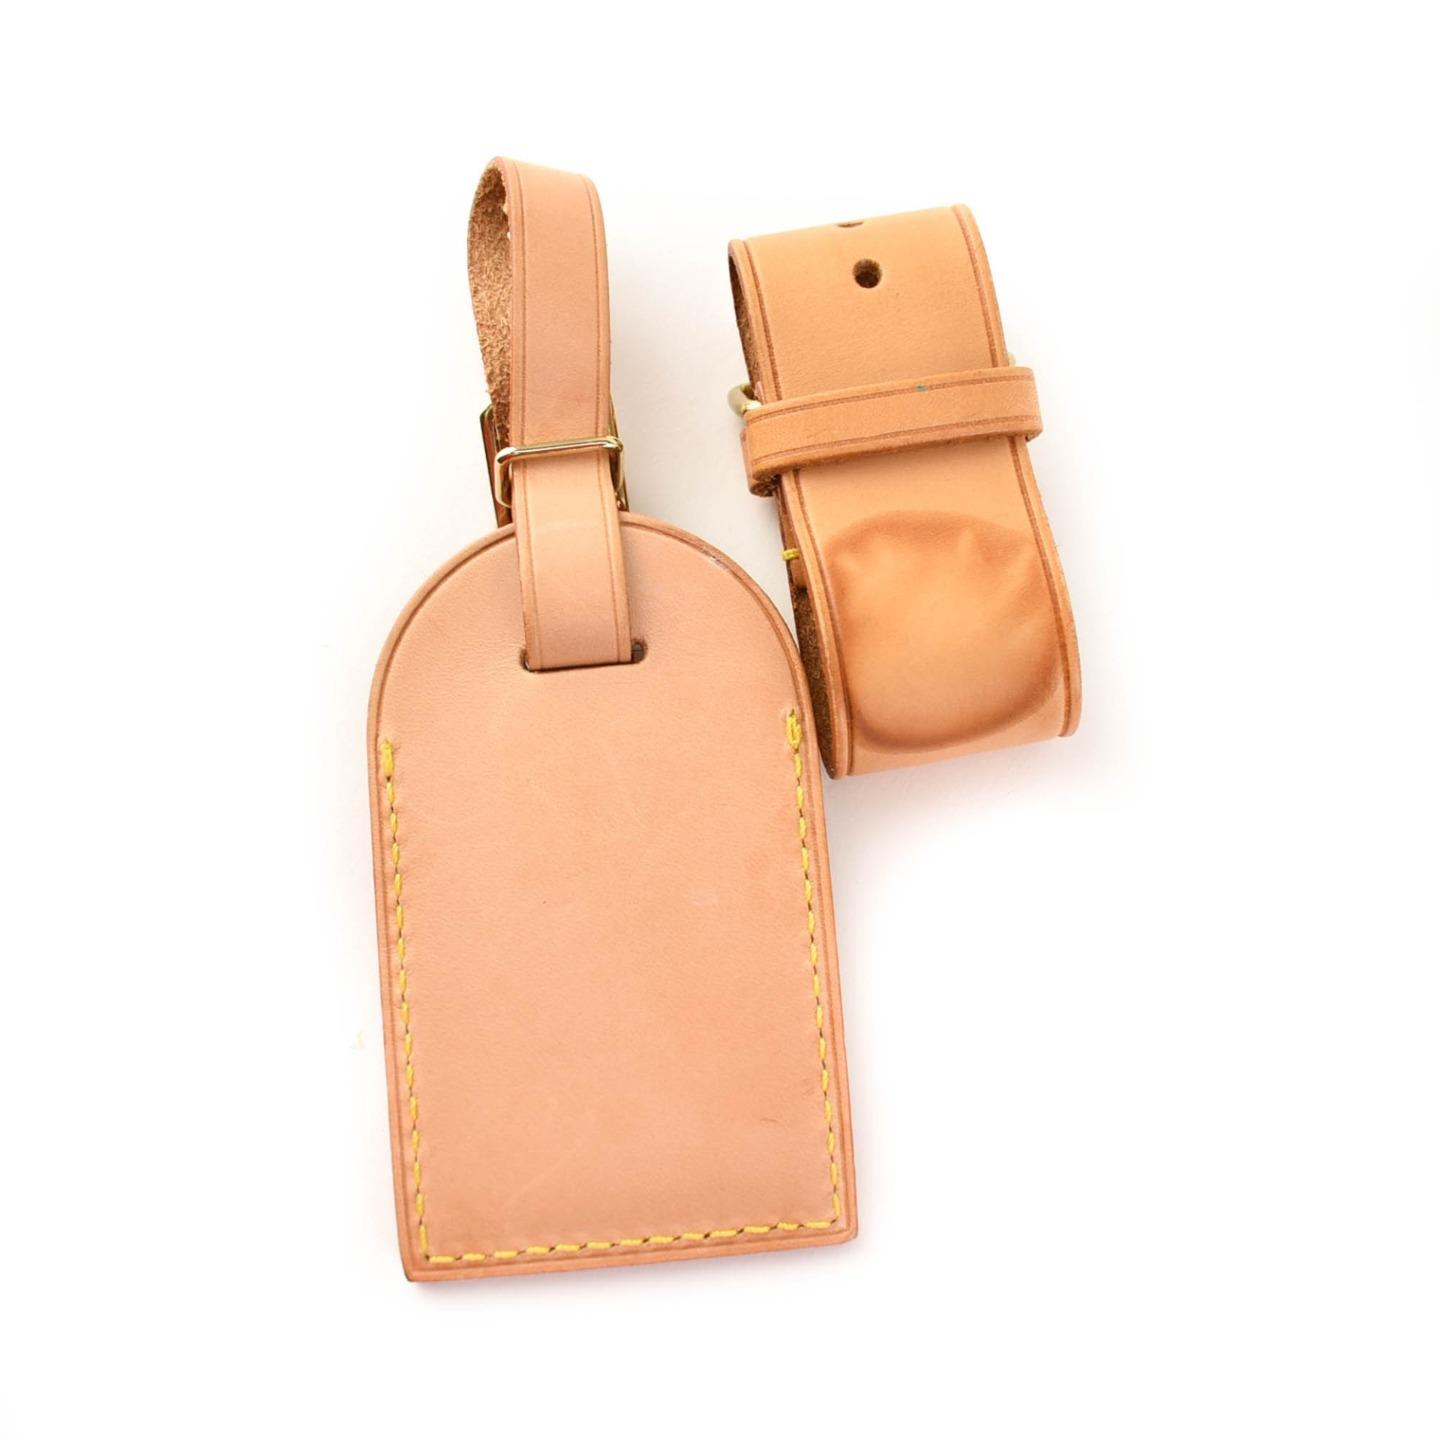 LOUIS VUITTON: Tan, Vachetta Leather Luggage Tag & Keepall Set (on) | eBay